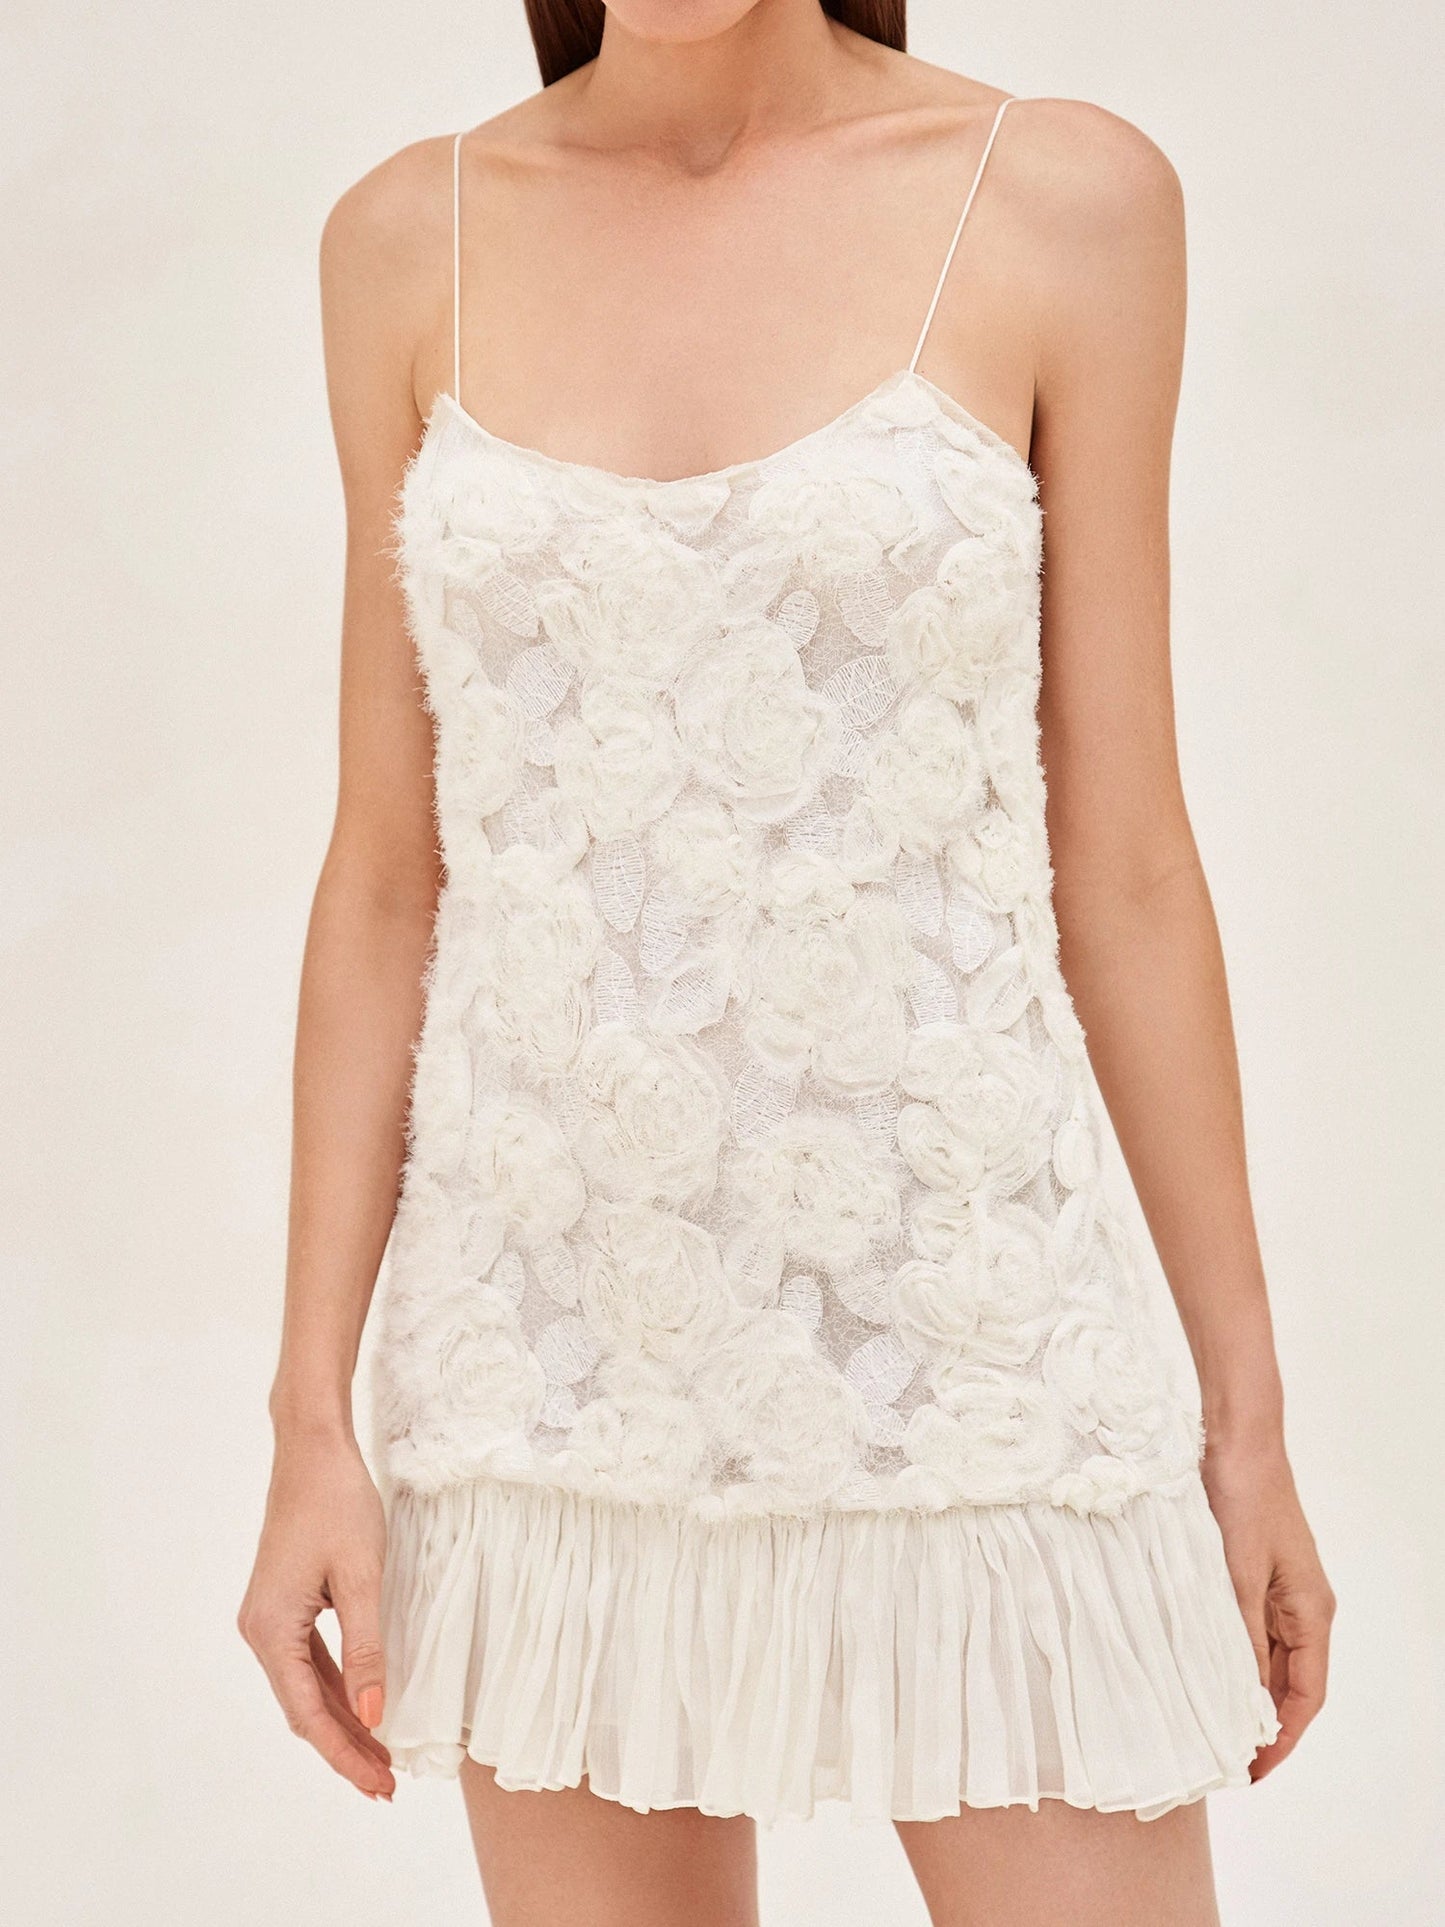 Blanc Dress in Ivory